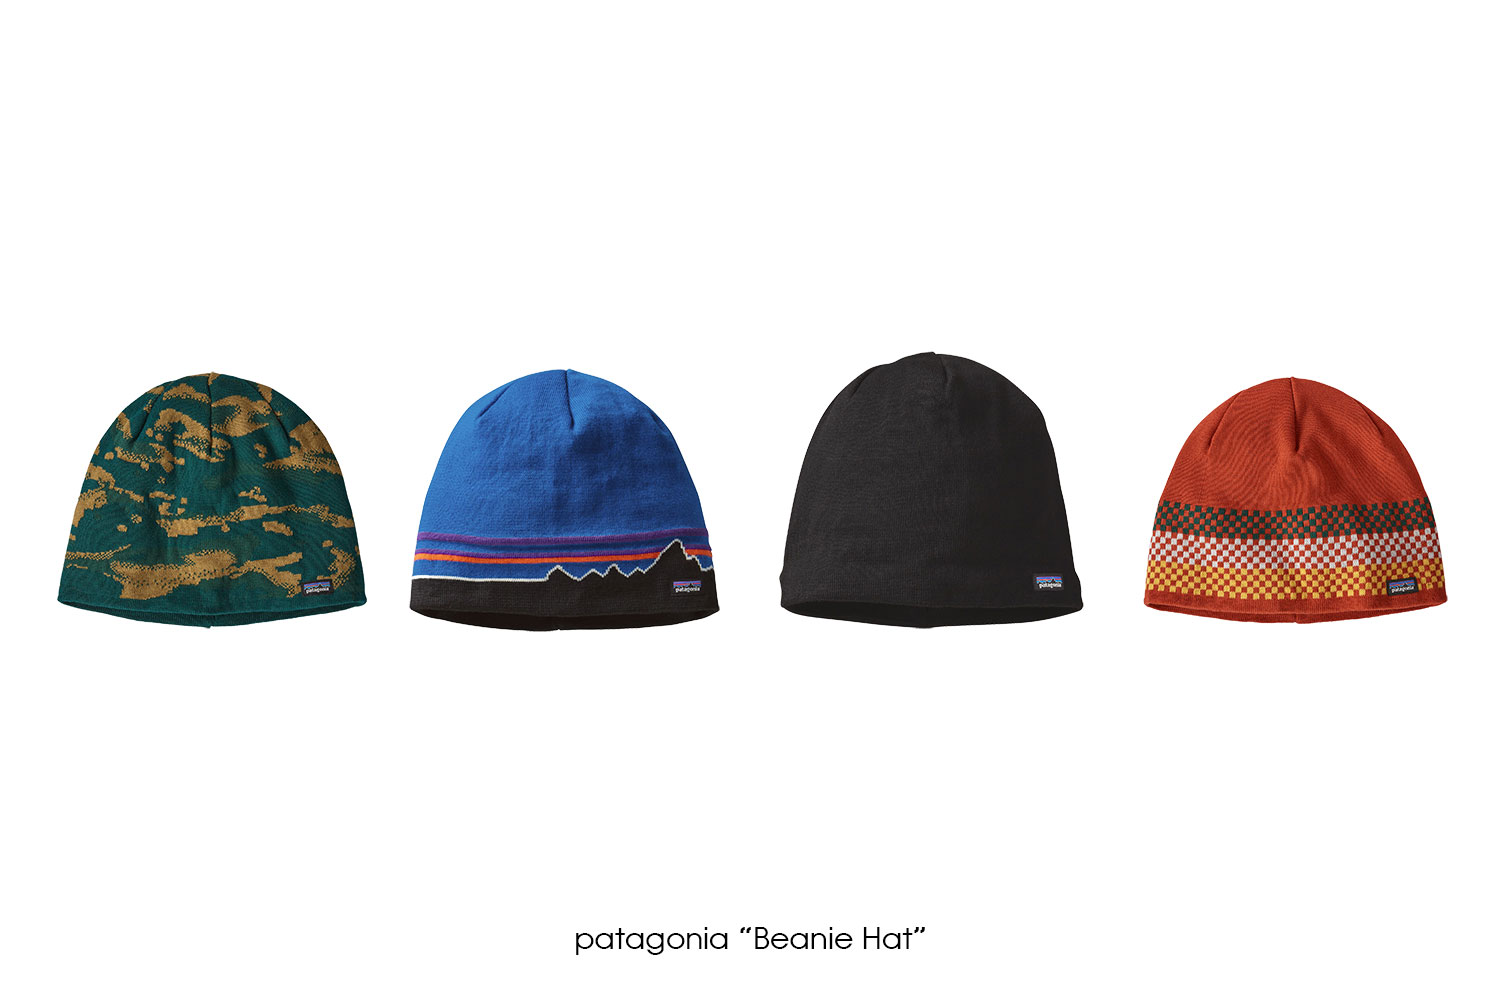 patagonia "Beanie Hat"